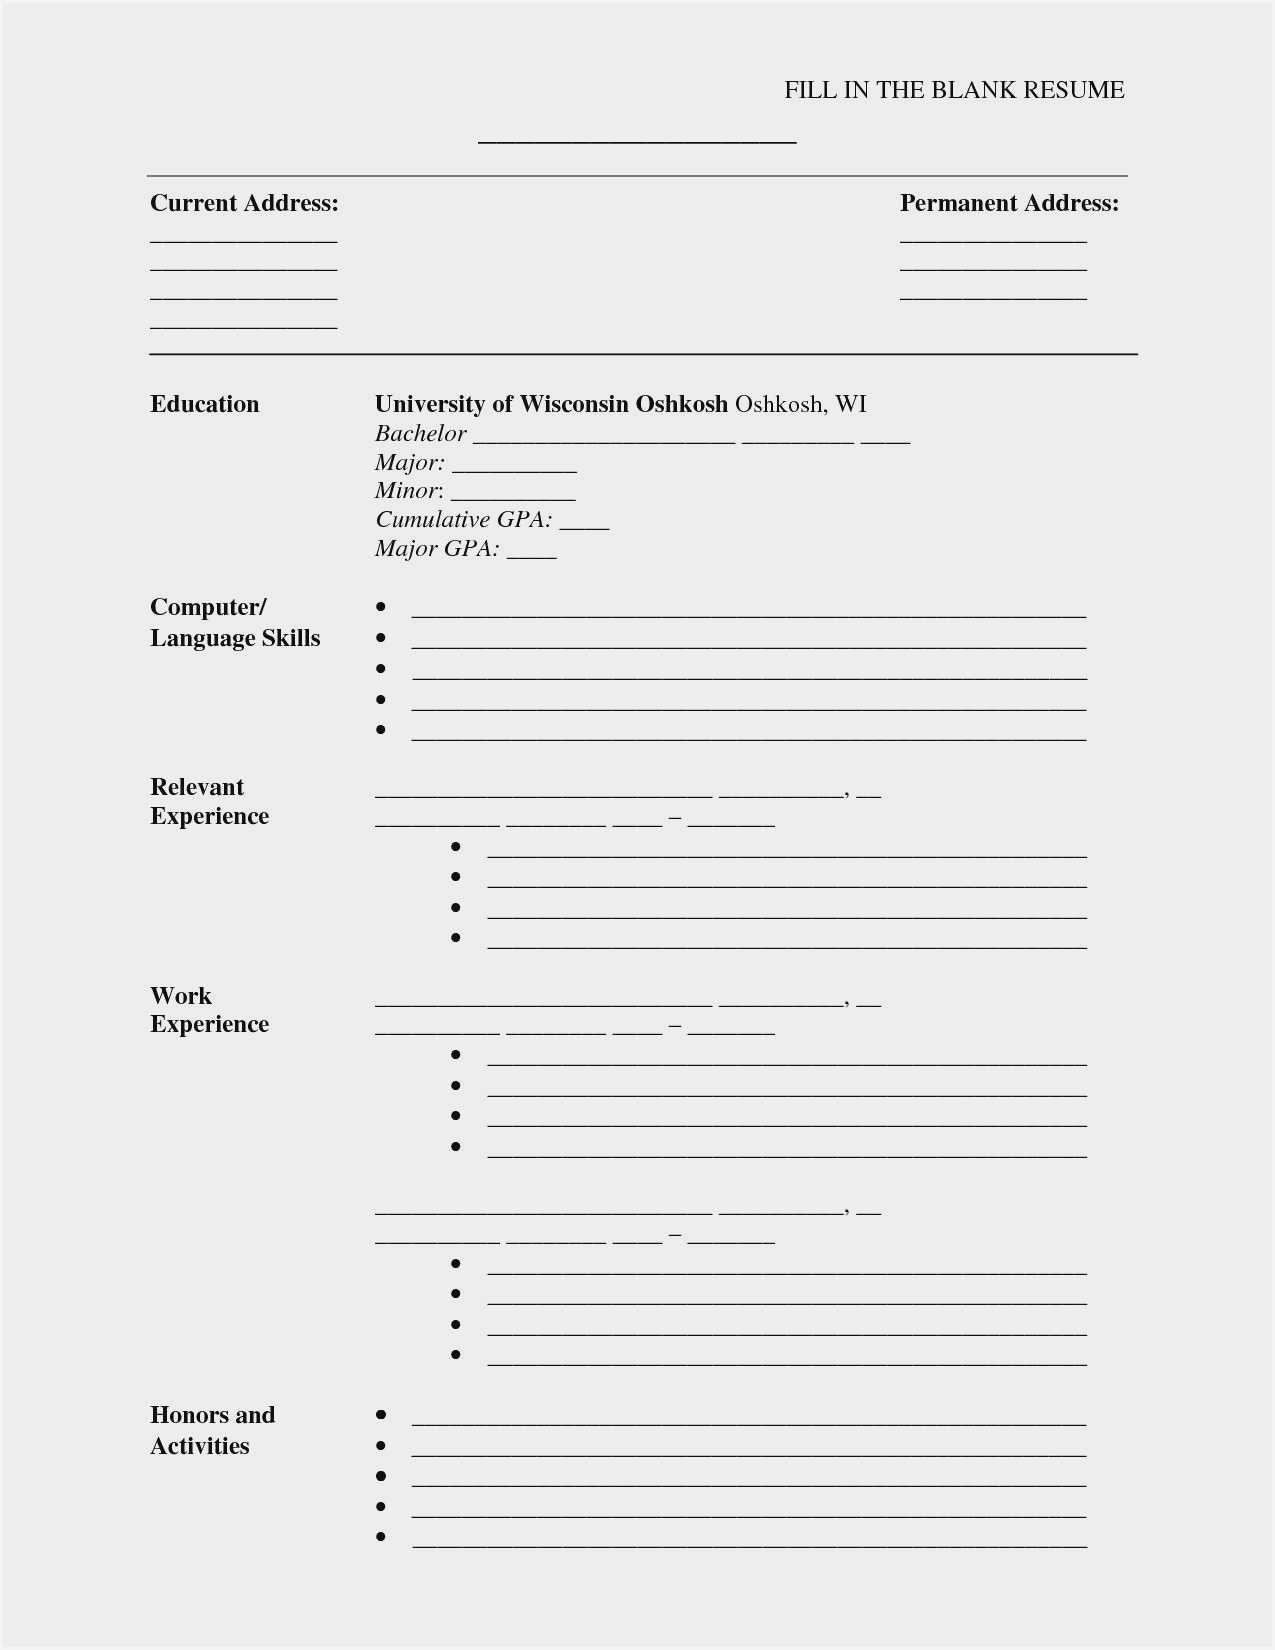 Blank Cv Format Word Download - Resume : Resume Sample #3945 In Free Blank Resume Templates For Microsoft Word